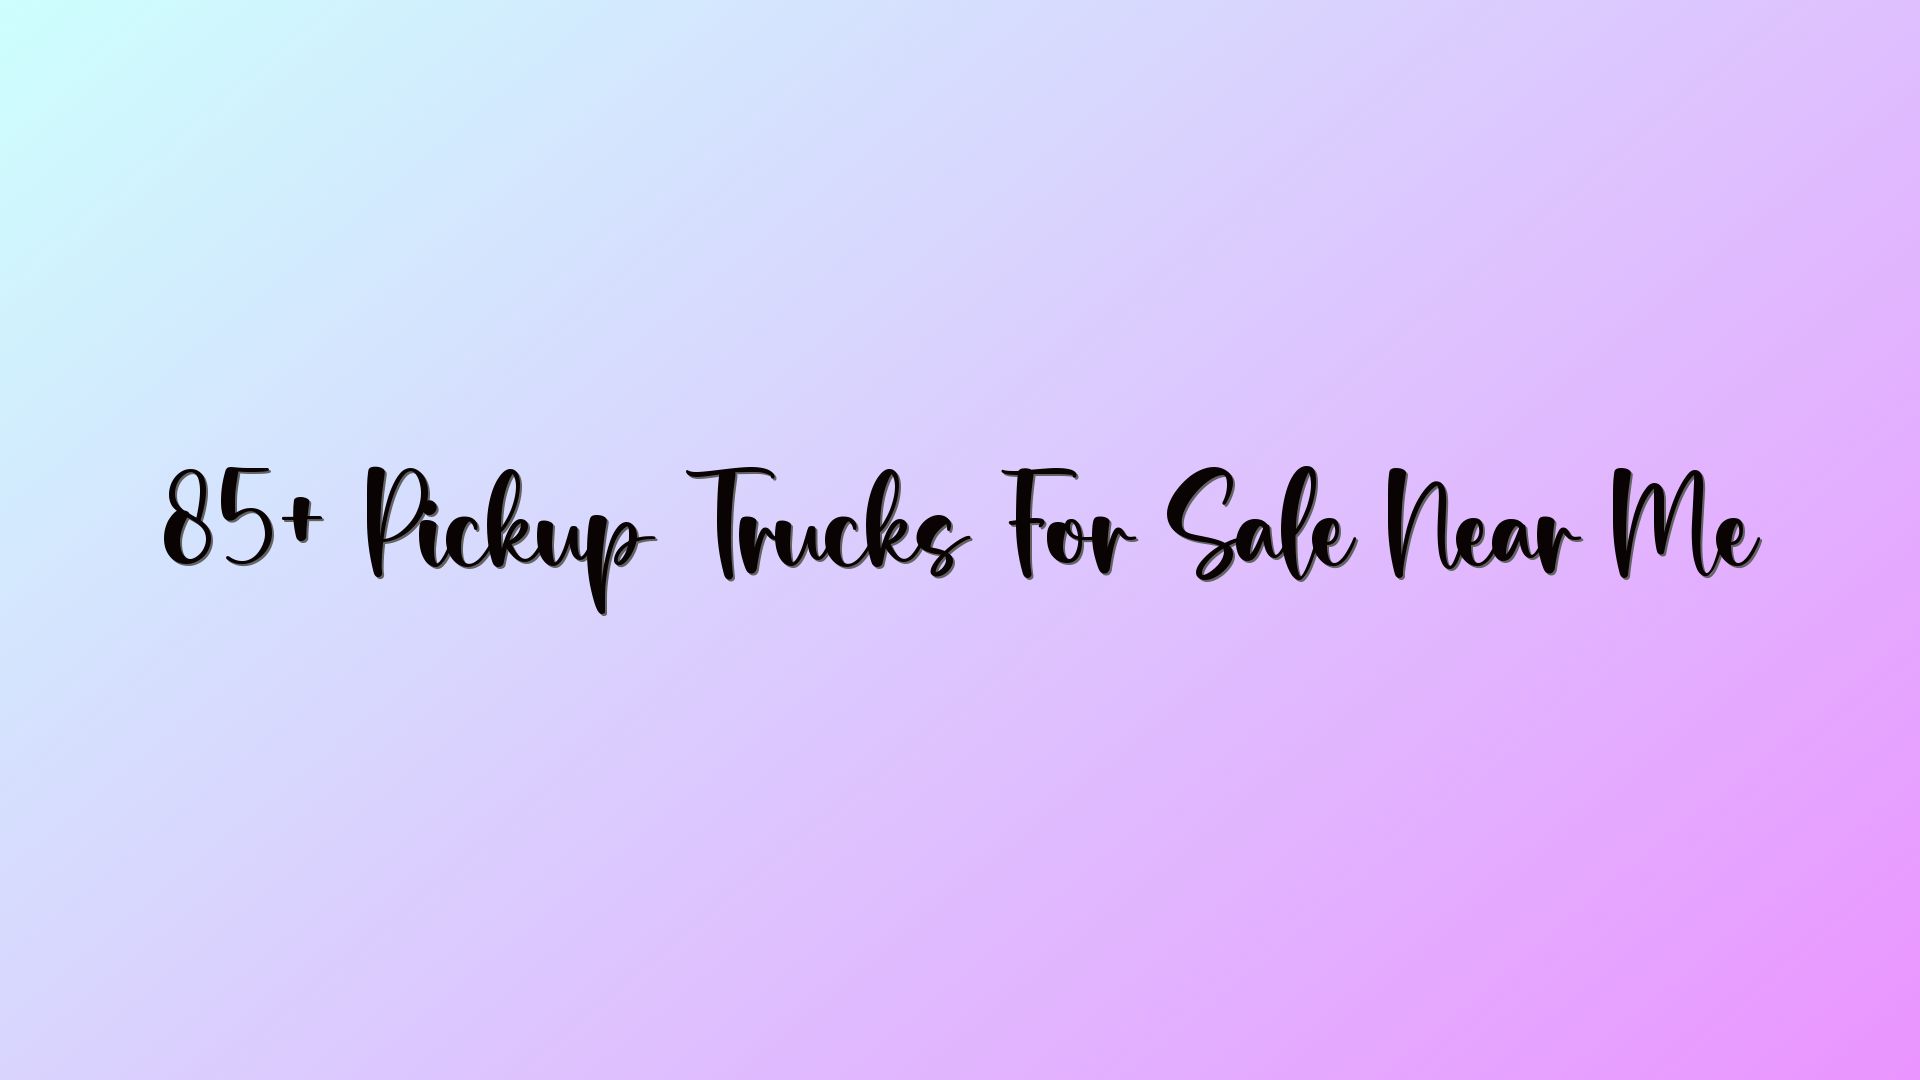 85+ Pickup Trucks For Sale Near Me